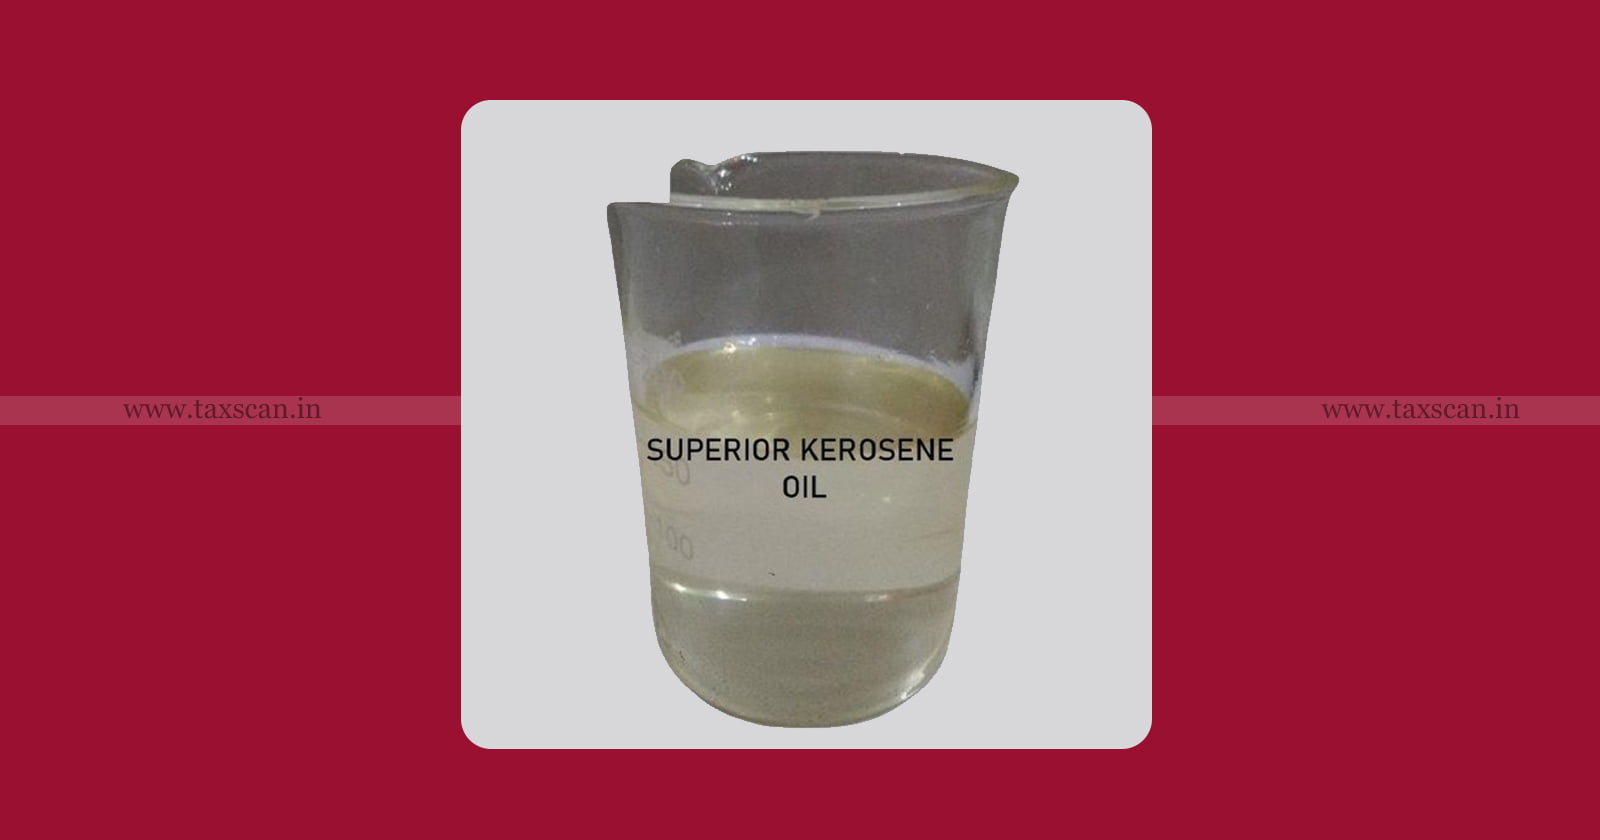 Proof - Manipulating - SKO samples - CESTAT - Suspension - Customs Broker Licence - Customs - Licence - Superior Kerosene Oil - Taxscan